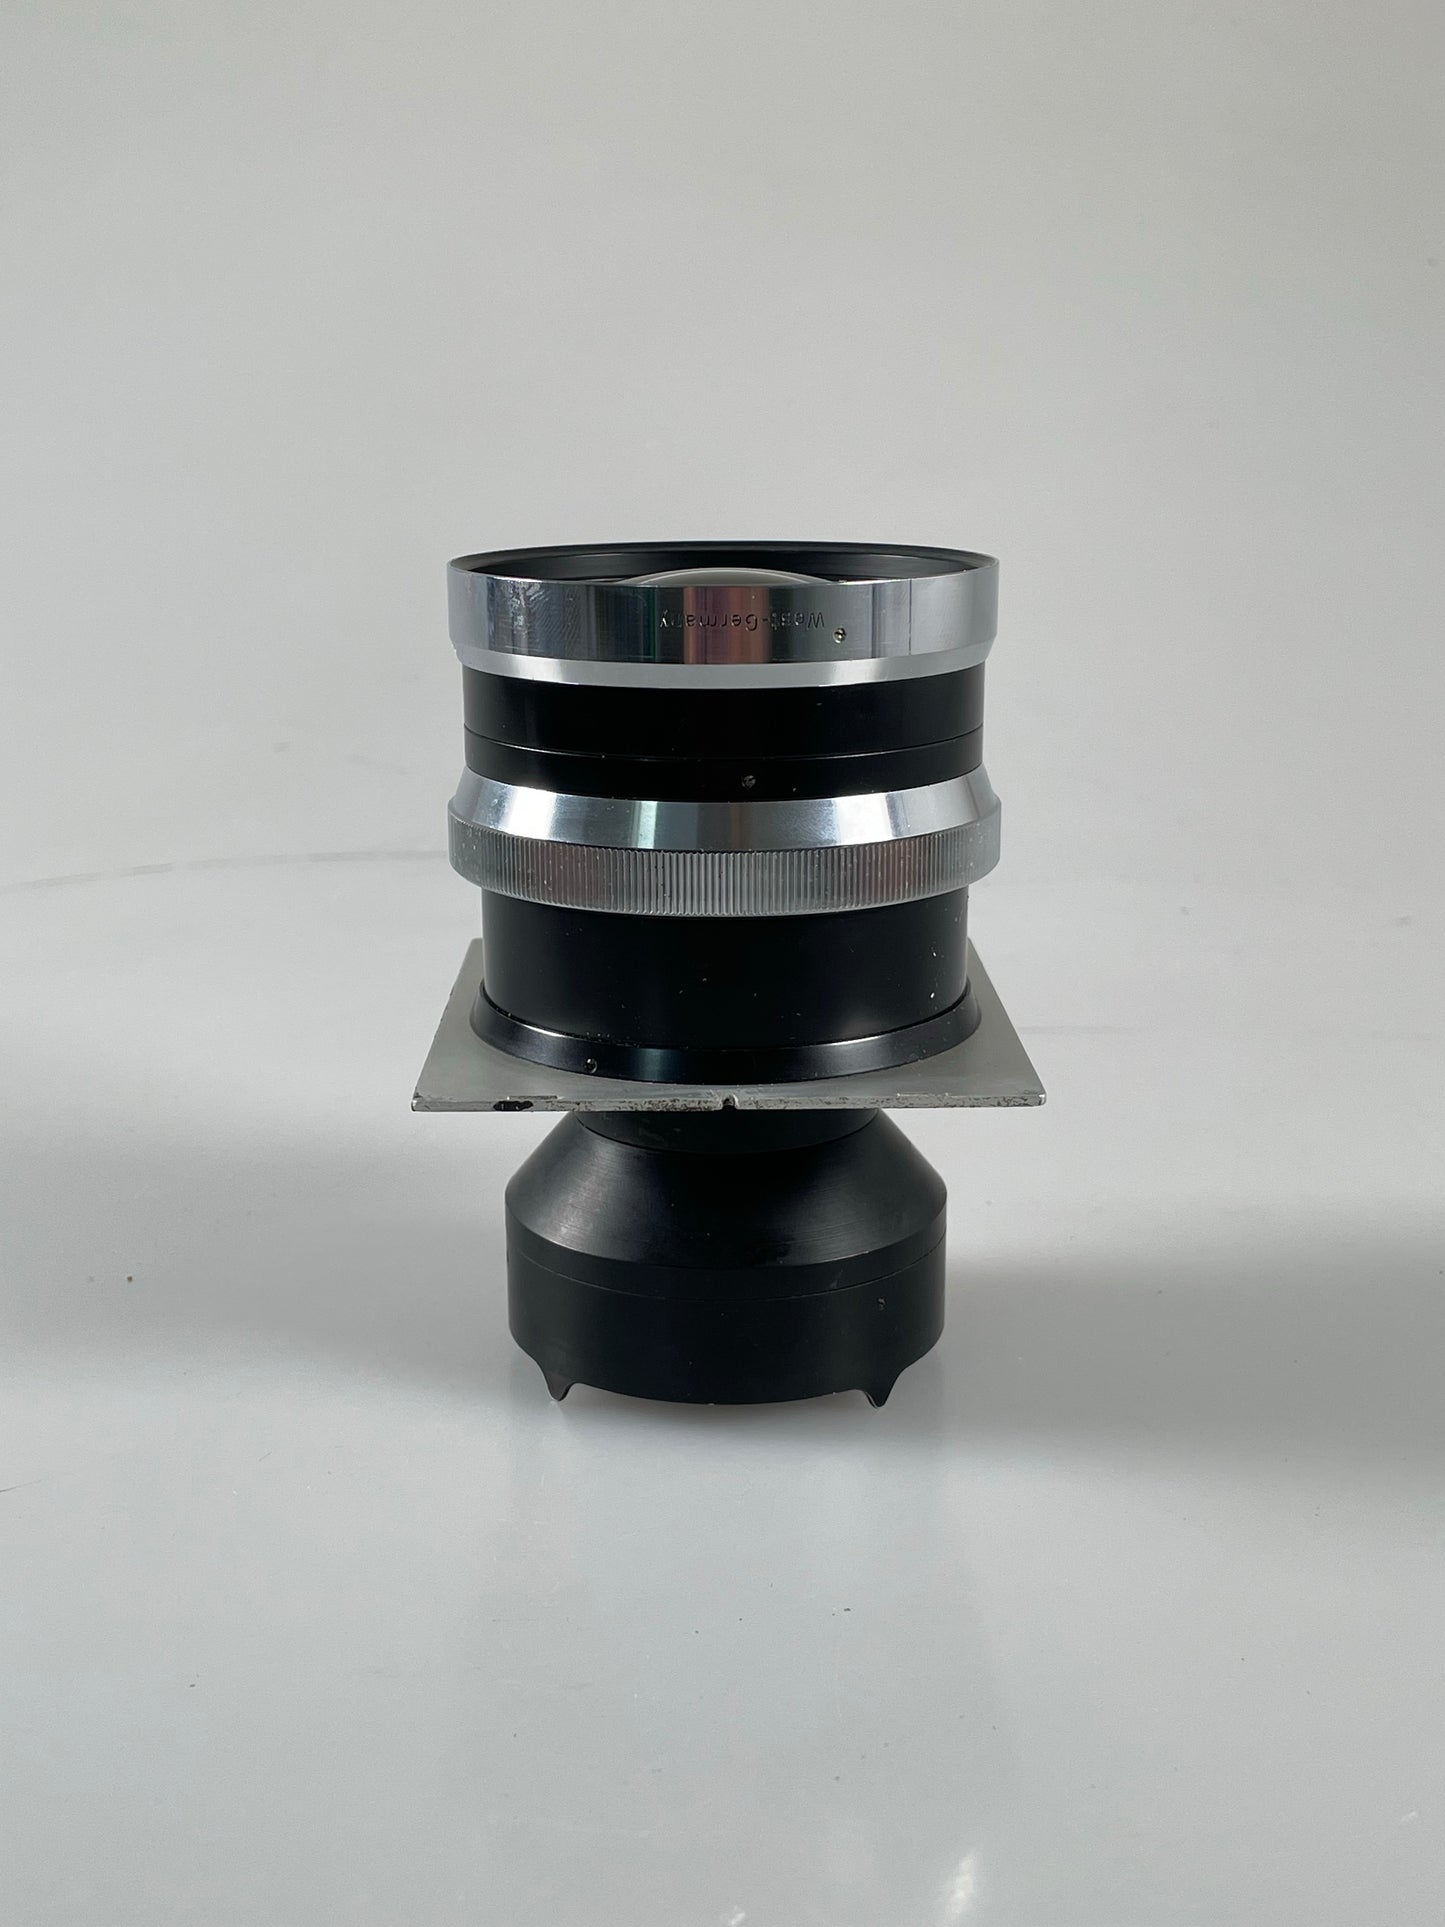 Linhof Select Carl Zeiss 53mm f4.5 Biogon w/ caps, board, finder mask